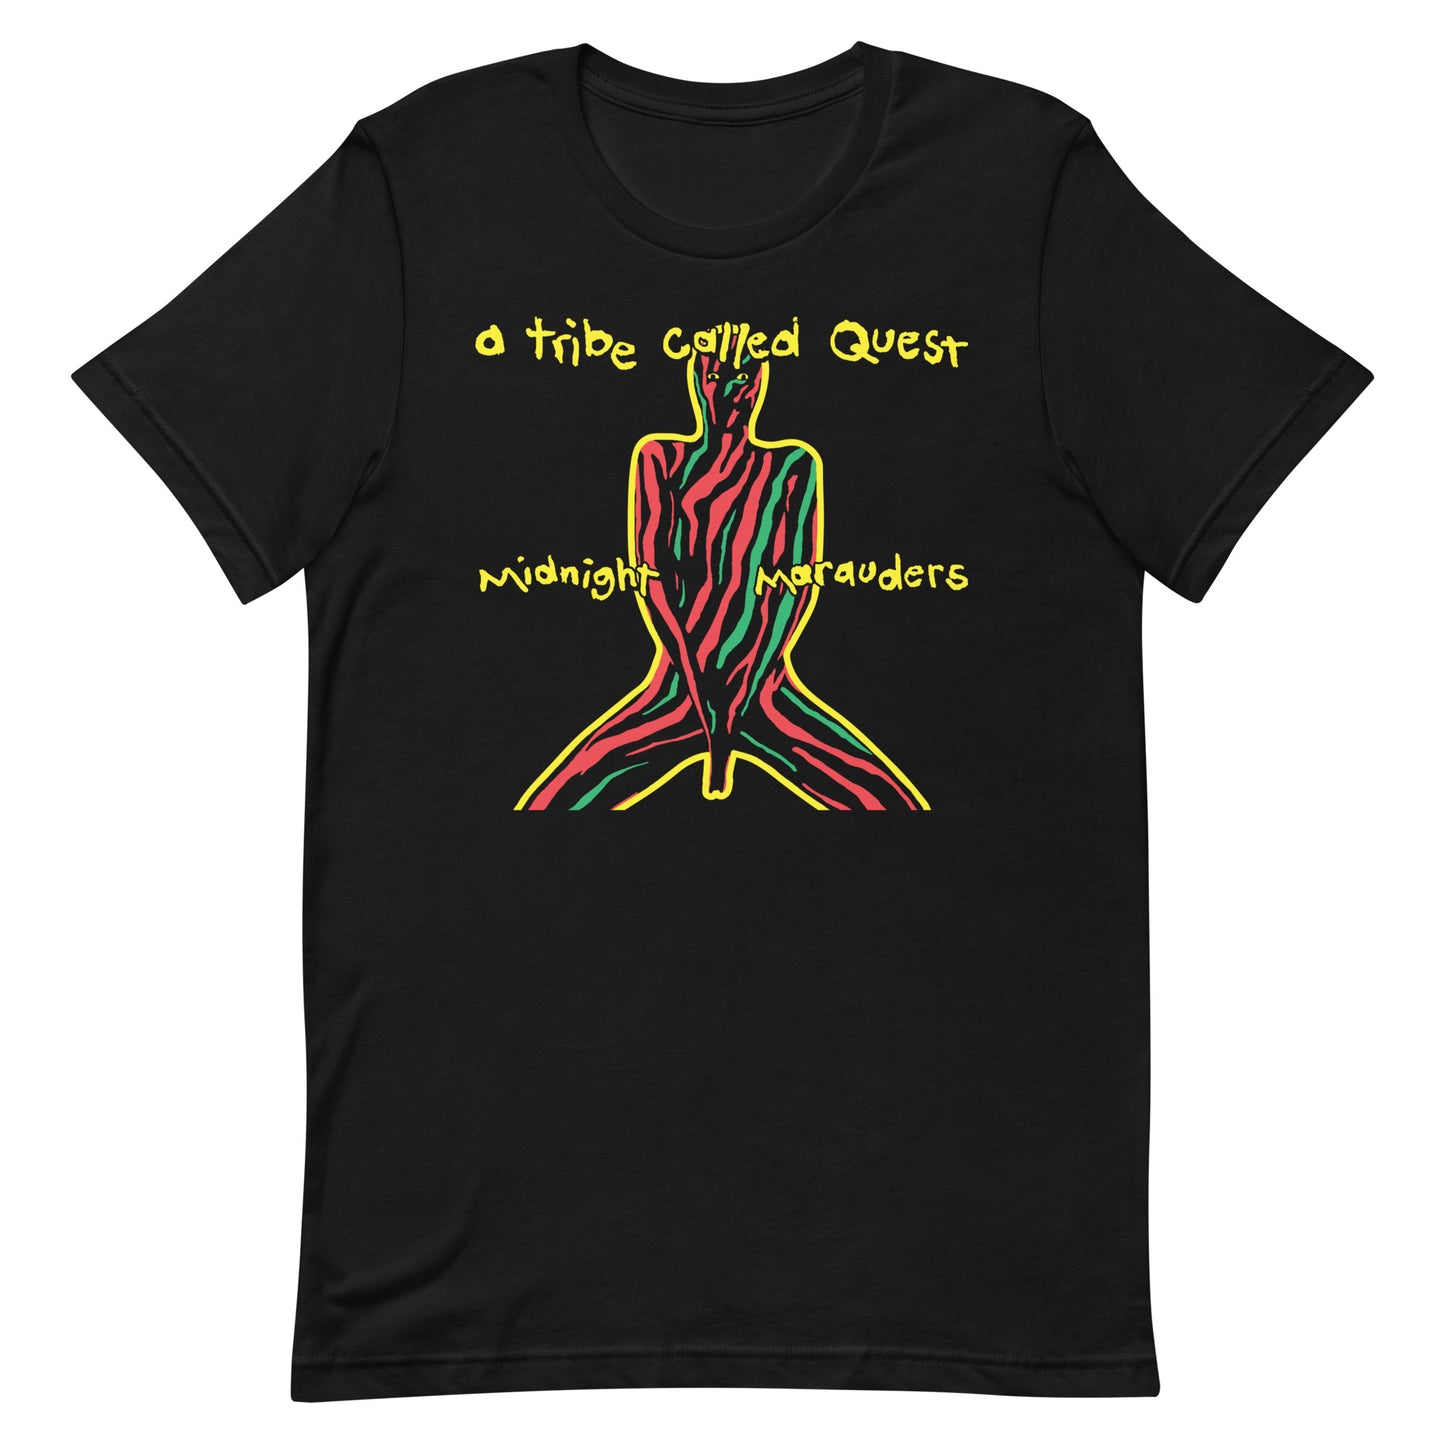 A Tribe Called Quest - Midnight Marauders T-Shirt